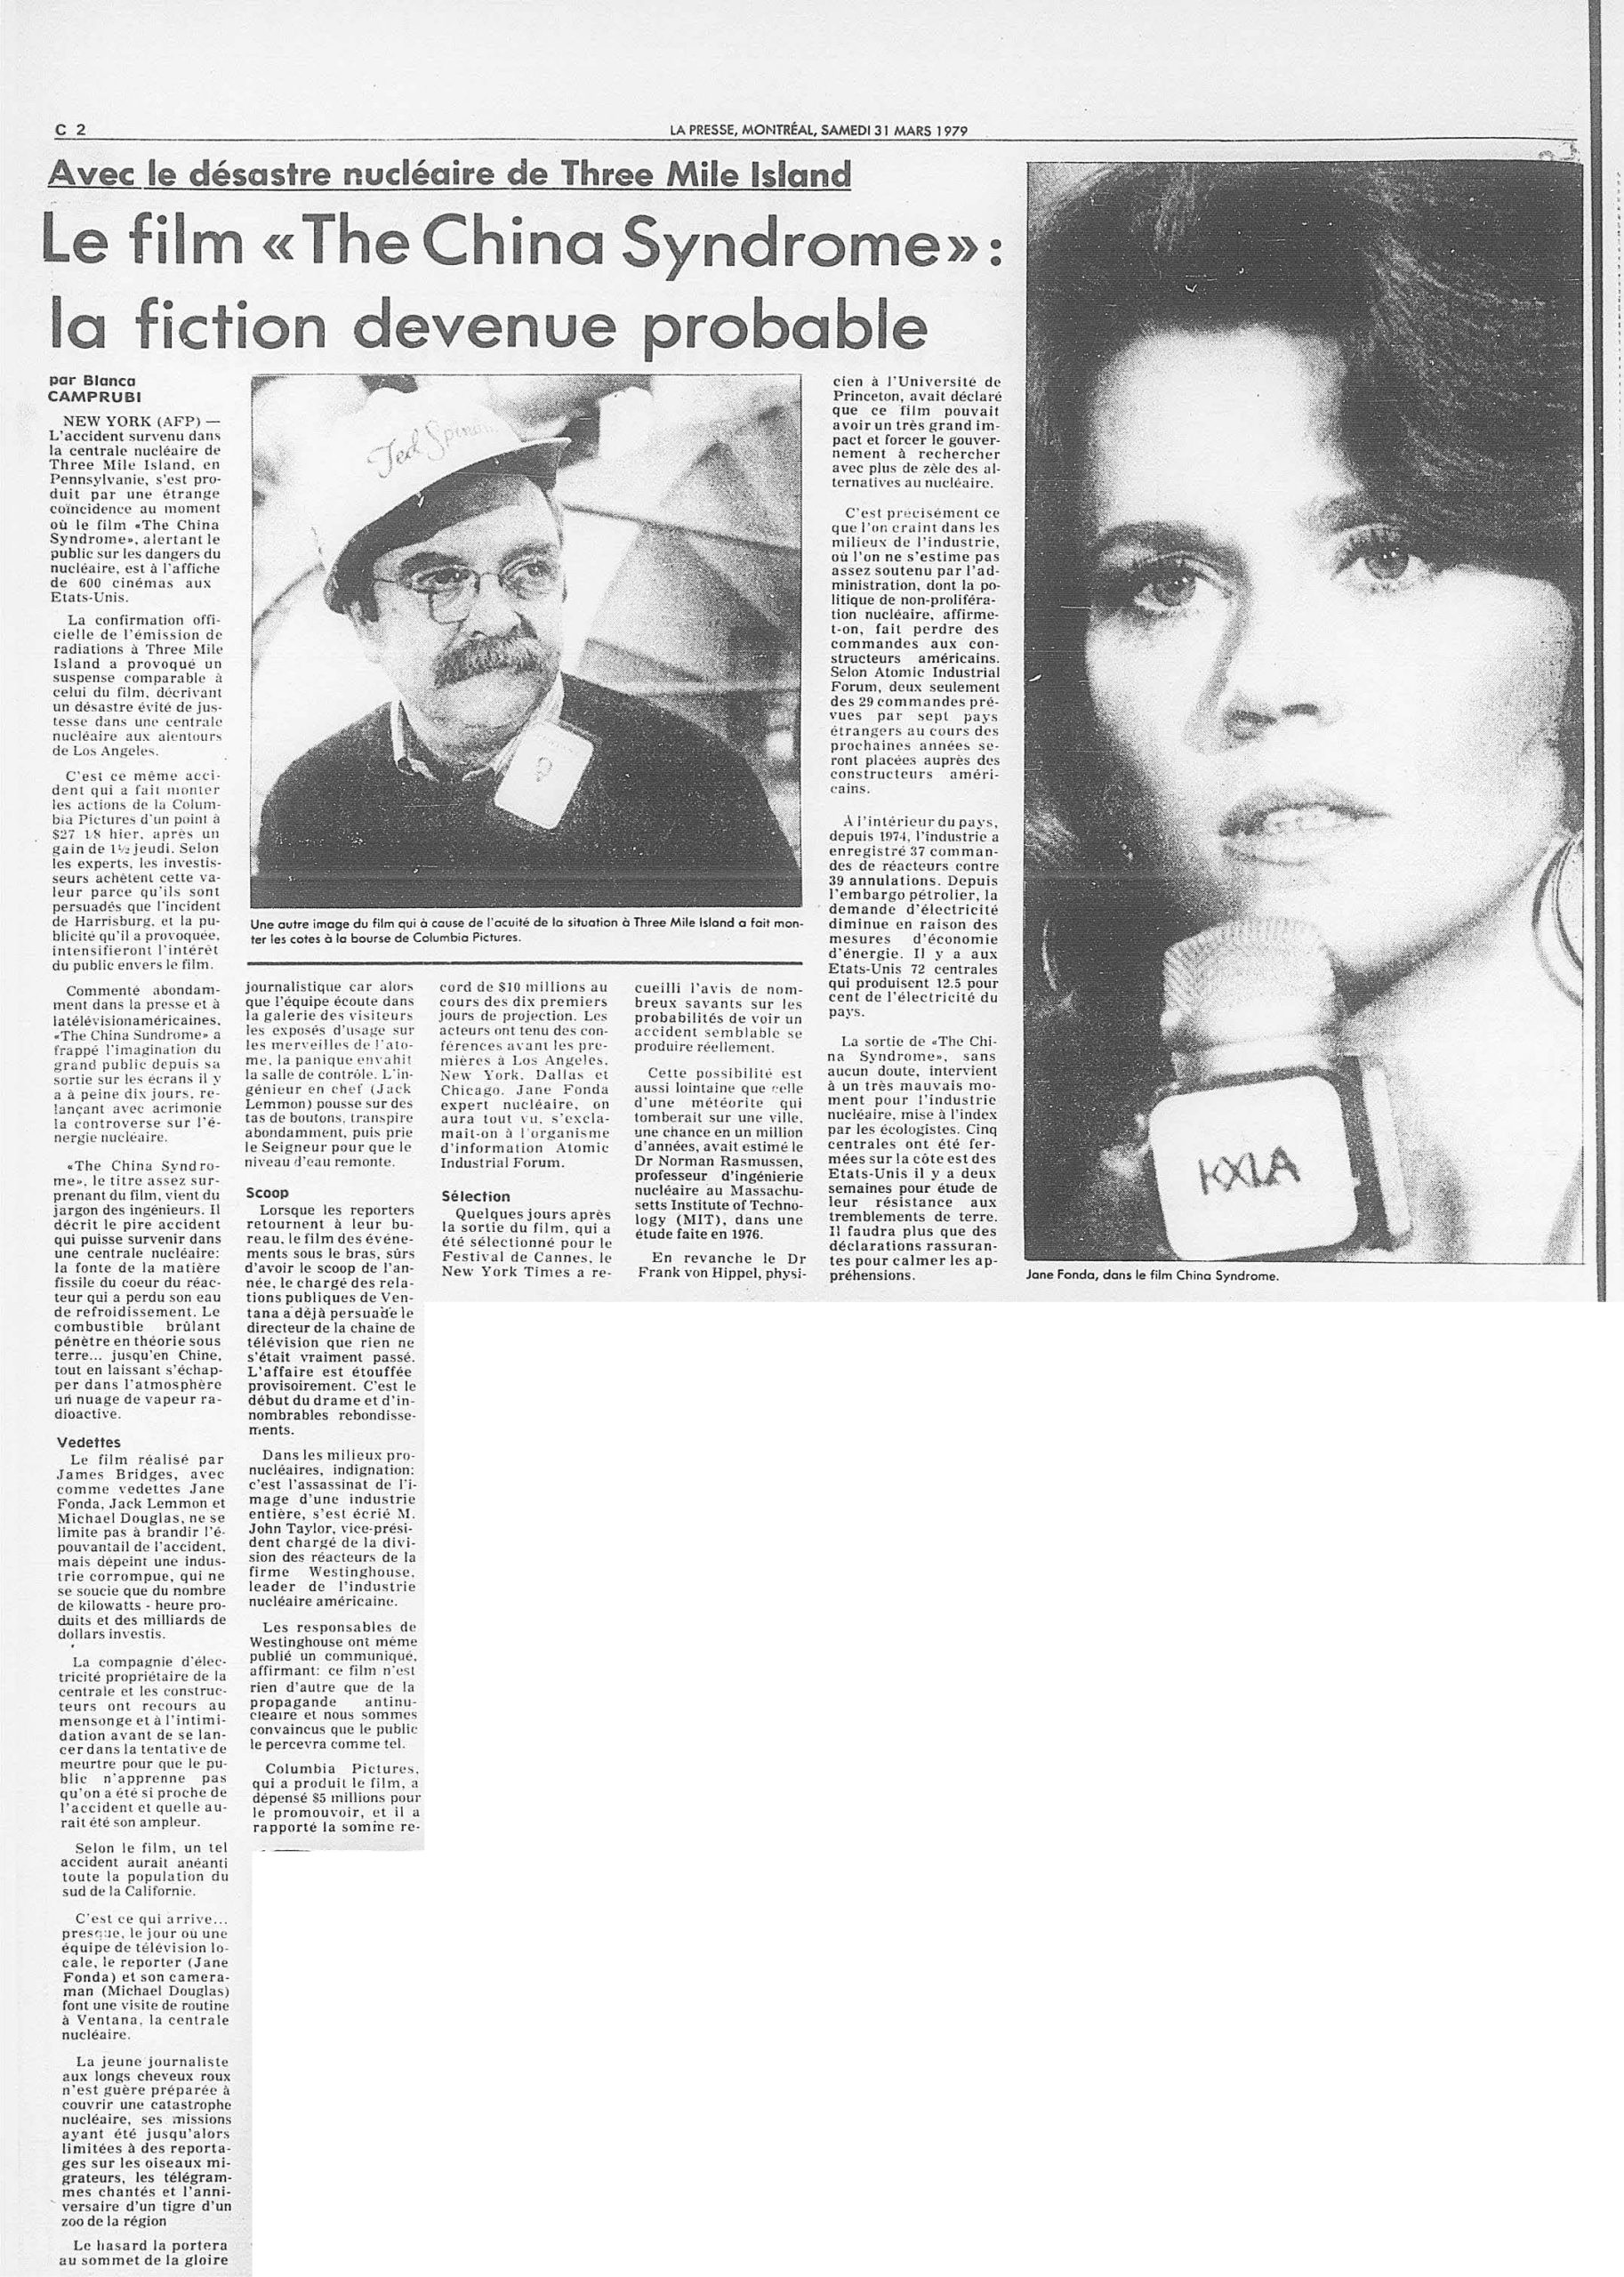 La Presse. 31 mars 1979 [Article de journal]
